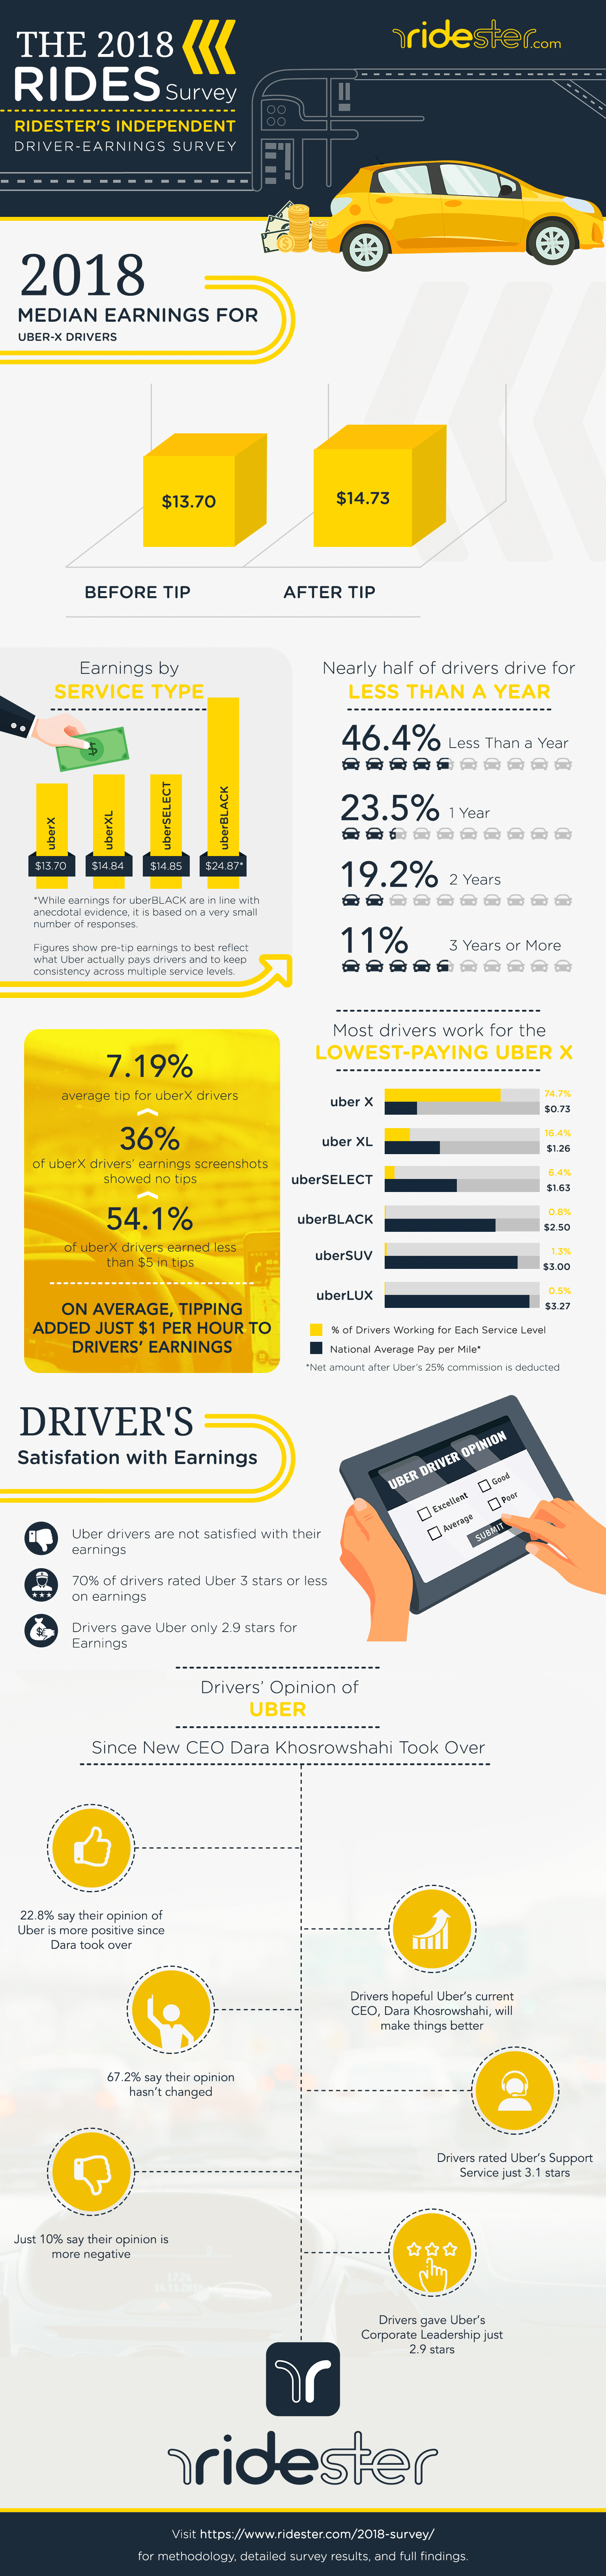 2018 rideshare survey - how much do uber drivers make?